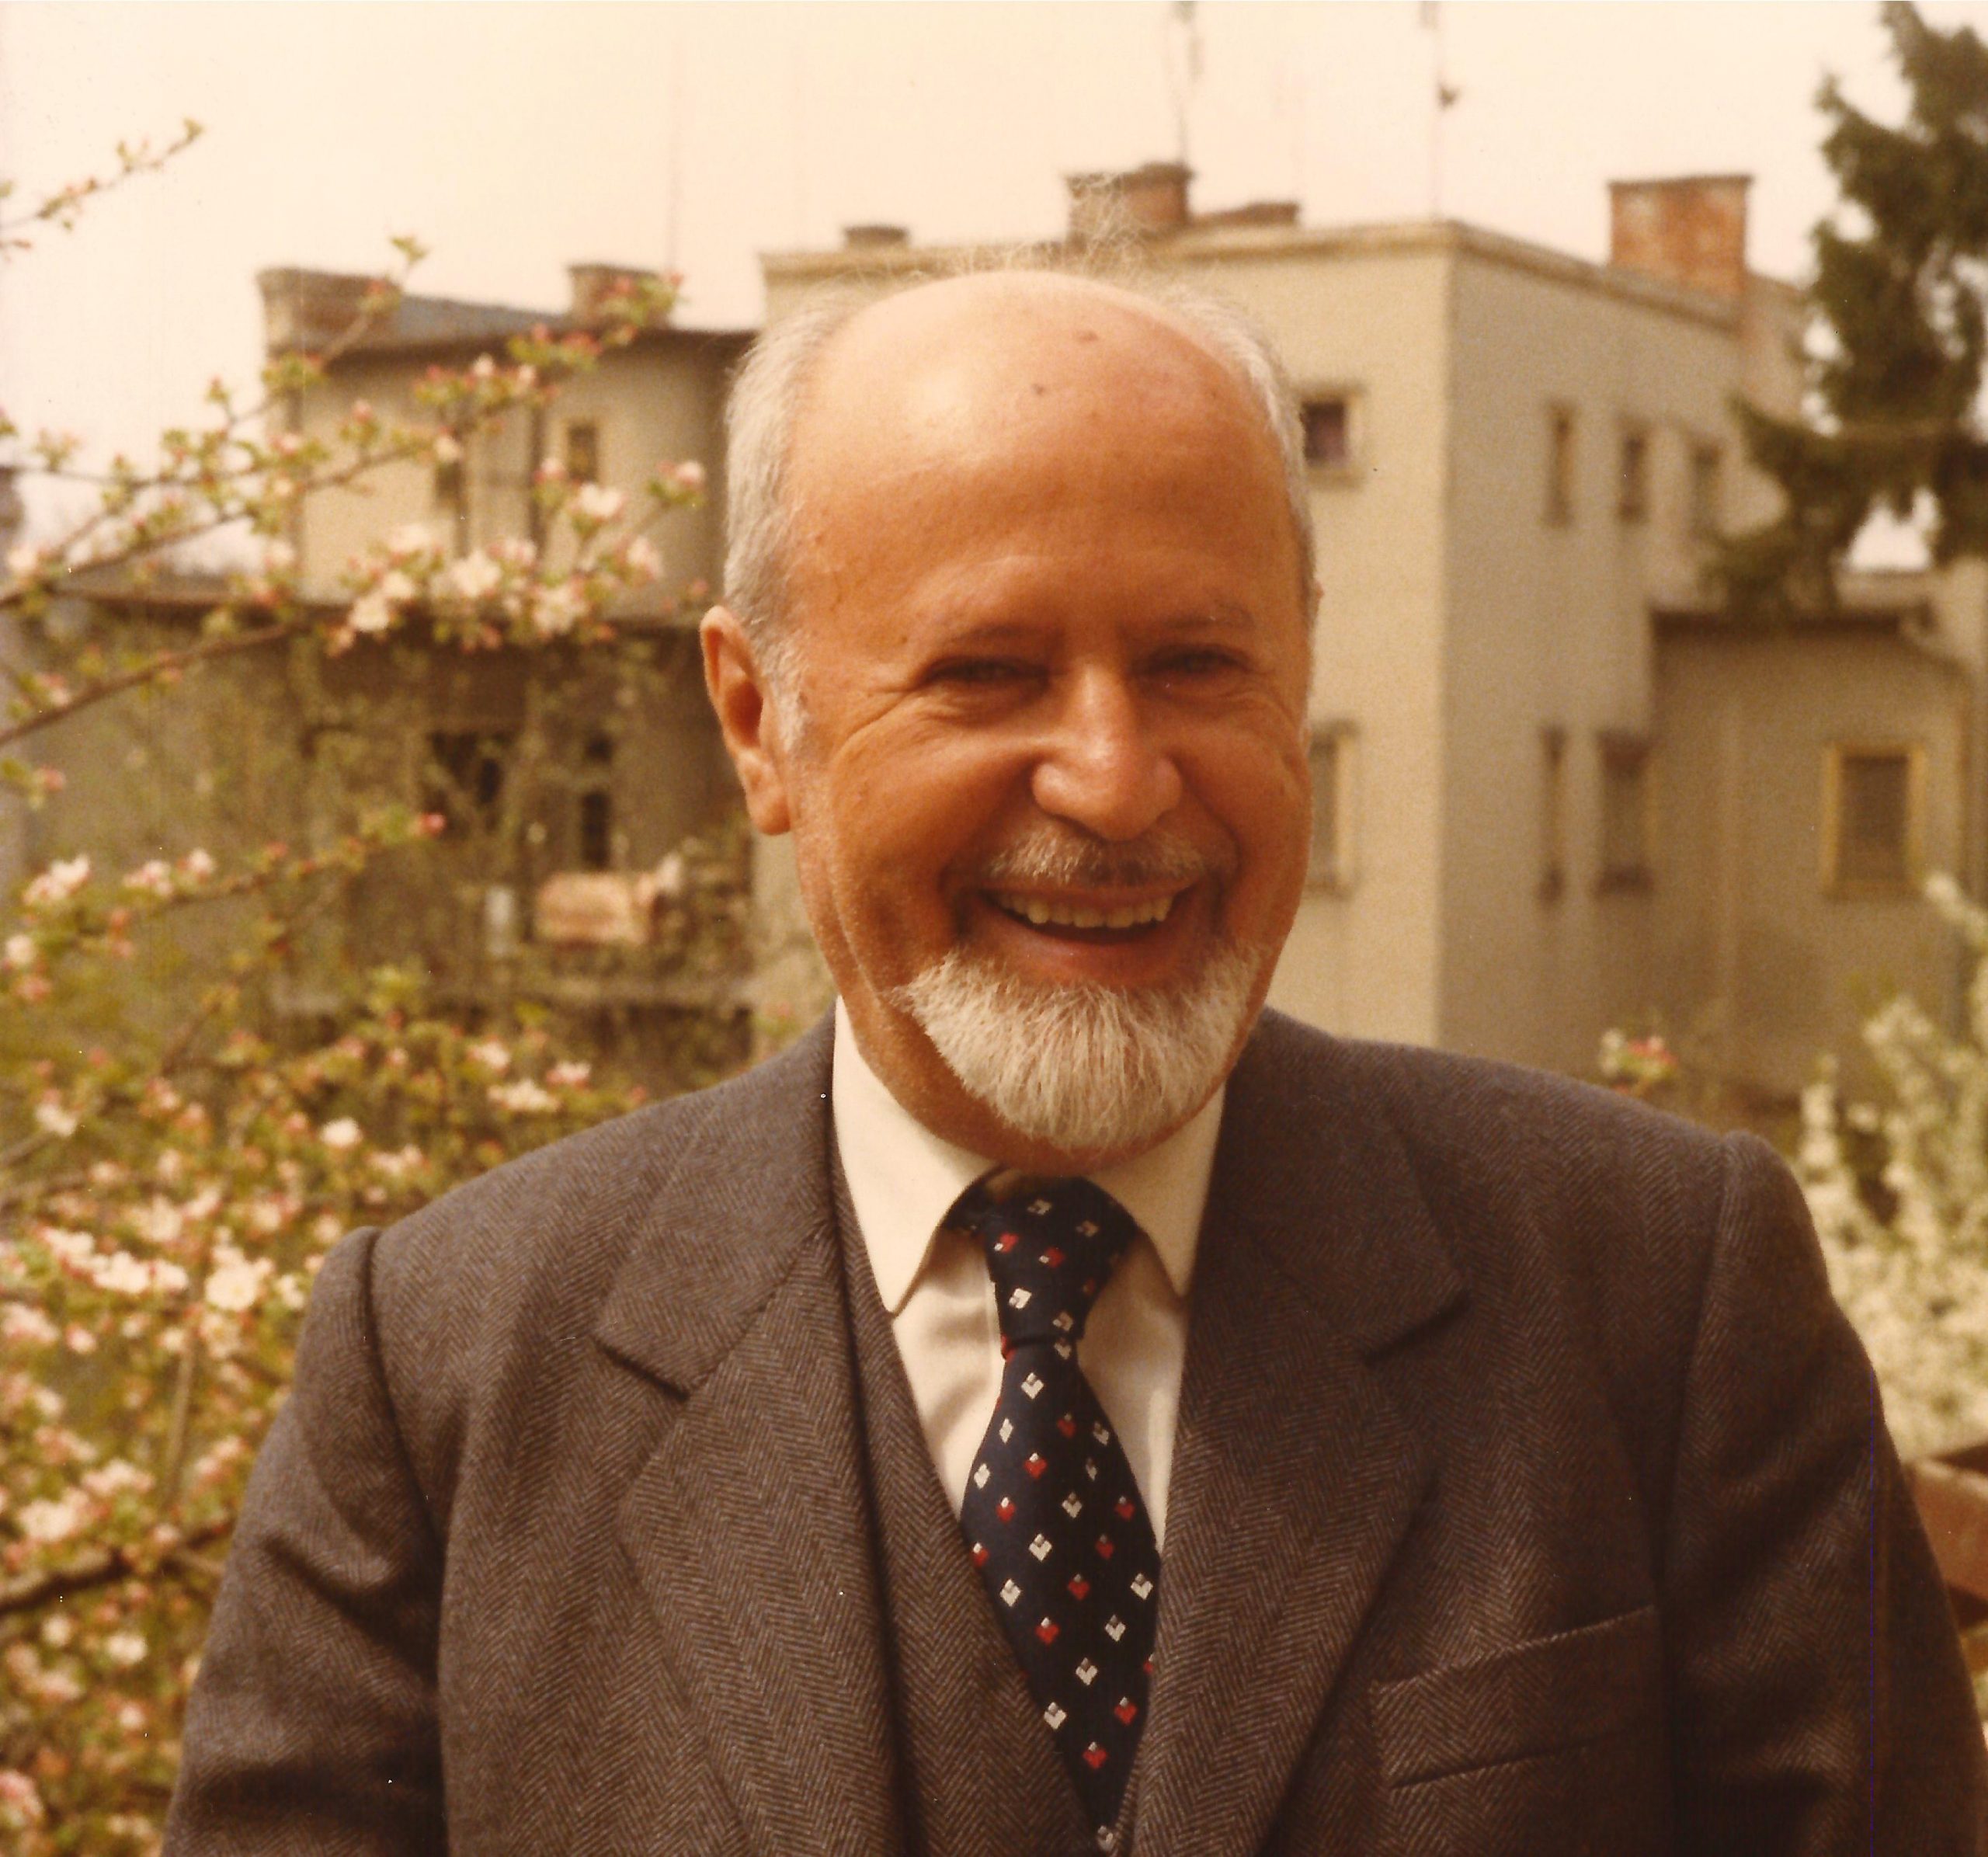 Rabinul şi profesorul Ernest Neumann şi livada de pomi